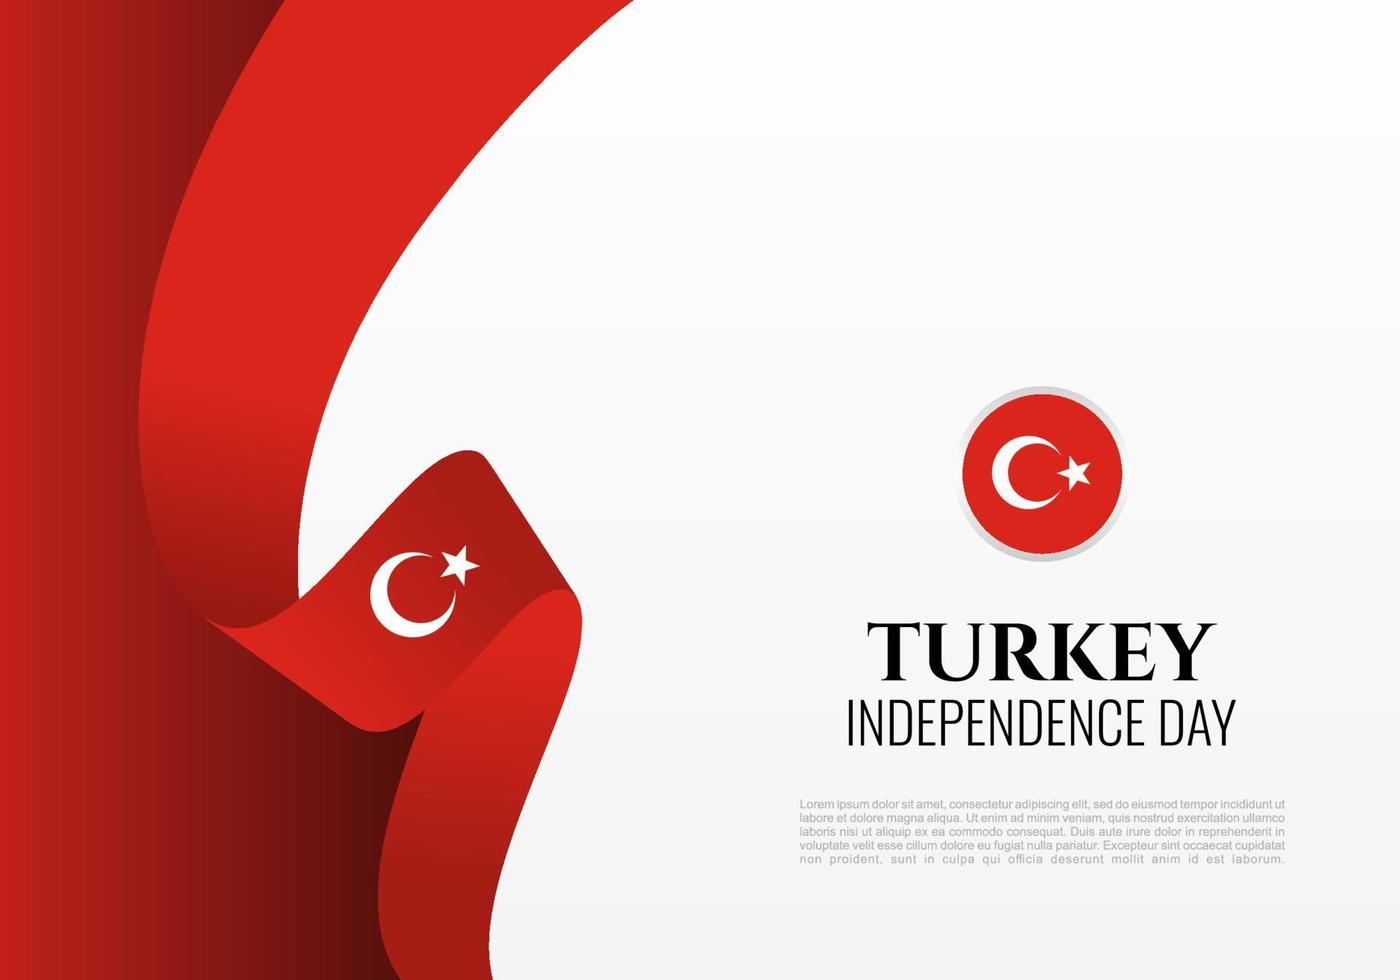 Turkey independence day background for celebration on October 29. vector